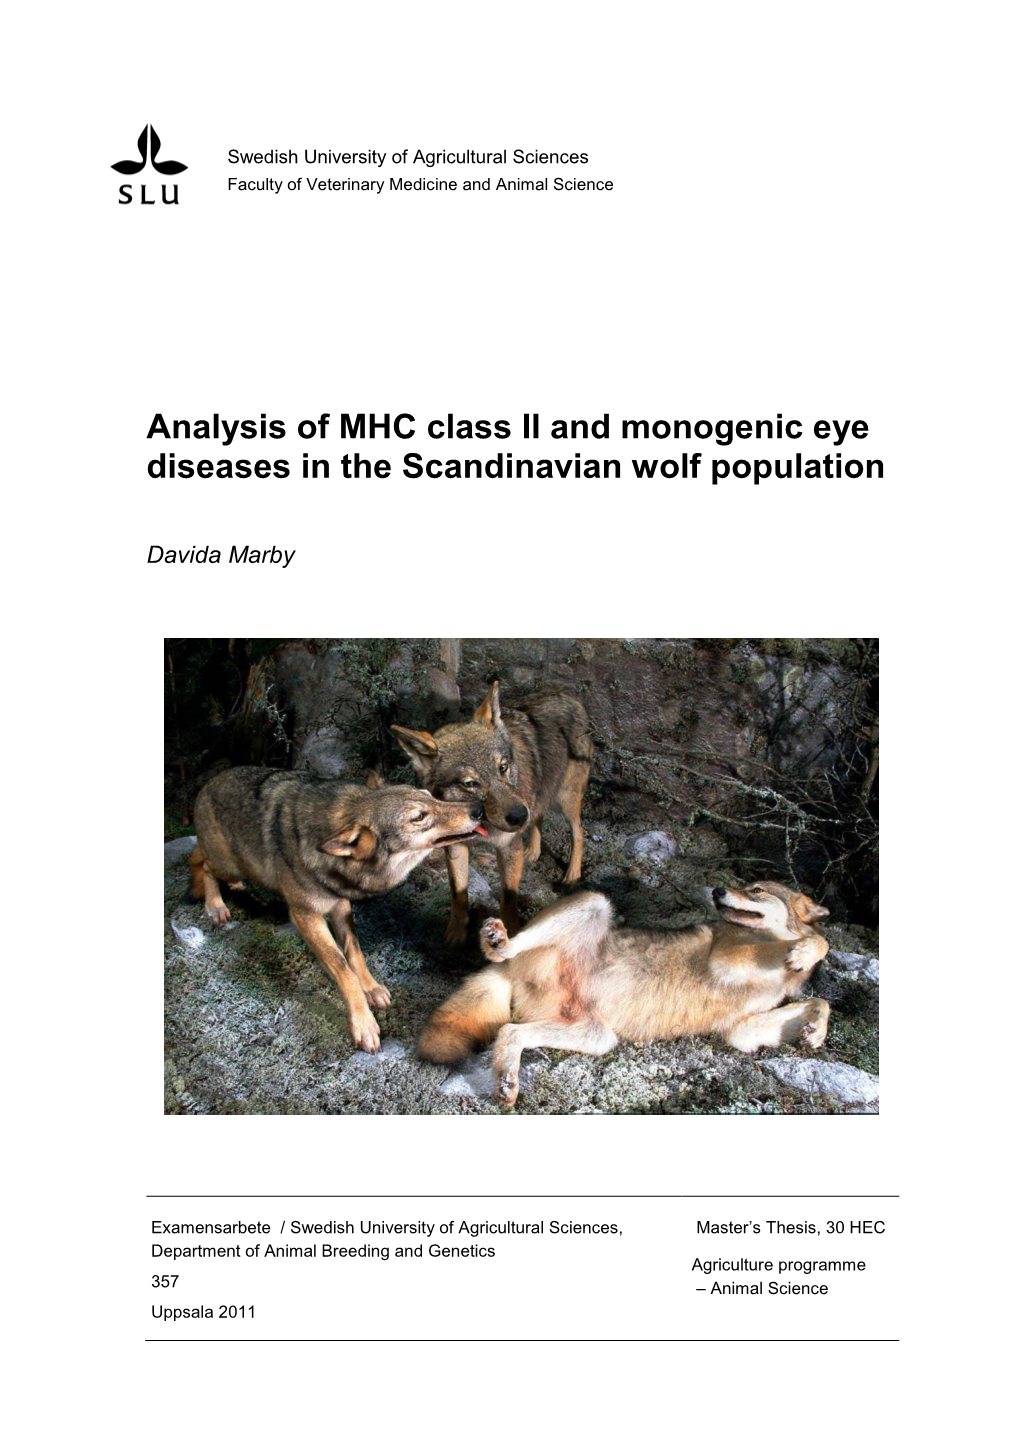 Analysis of MHC Class II and Monogenic Eye Diseases in the Scandinavian Wolf Population